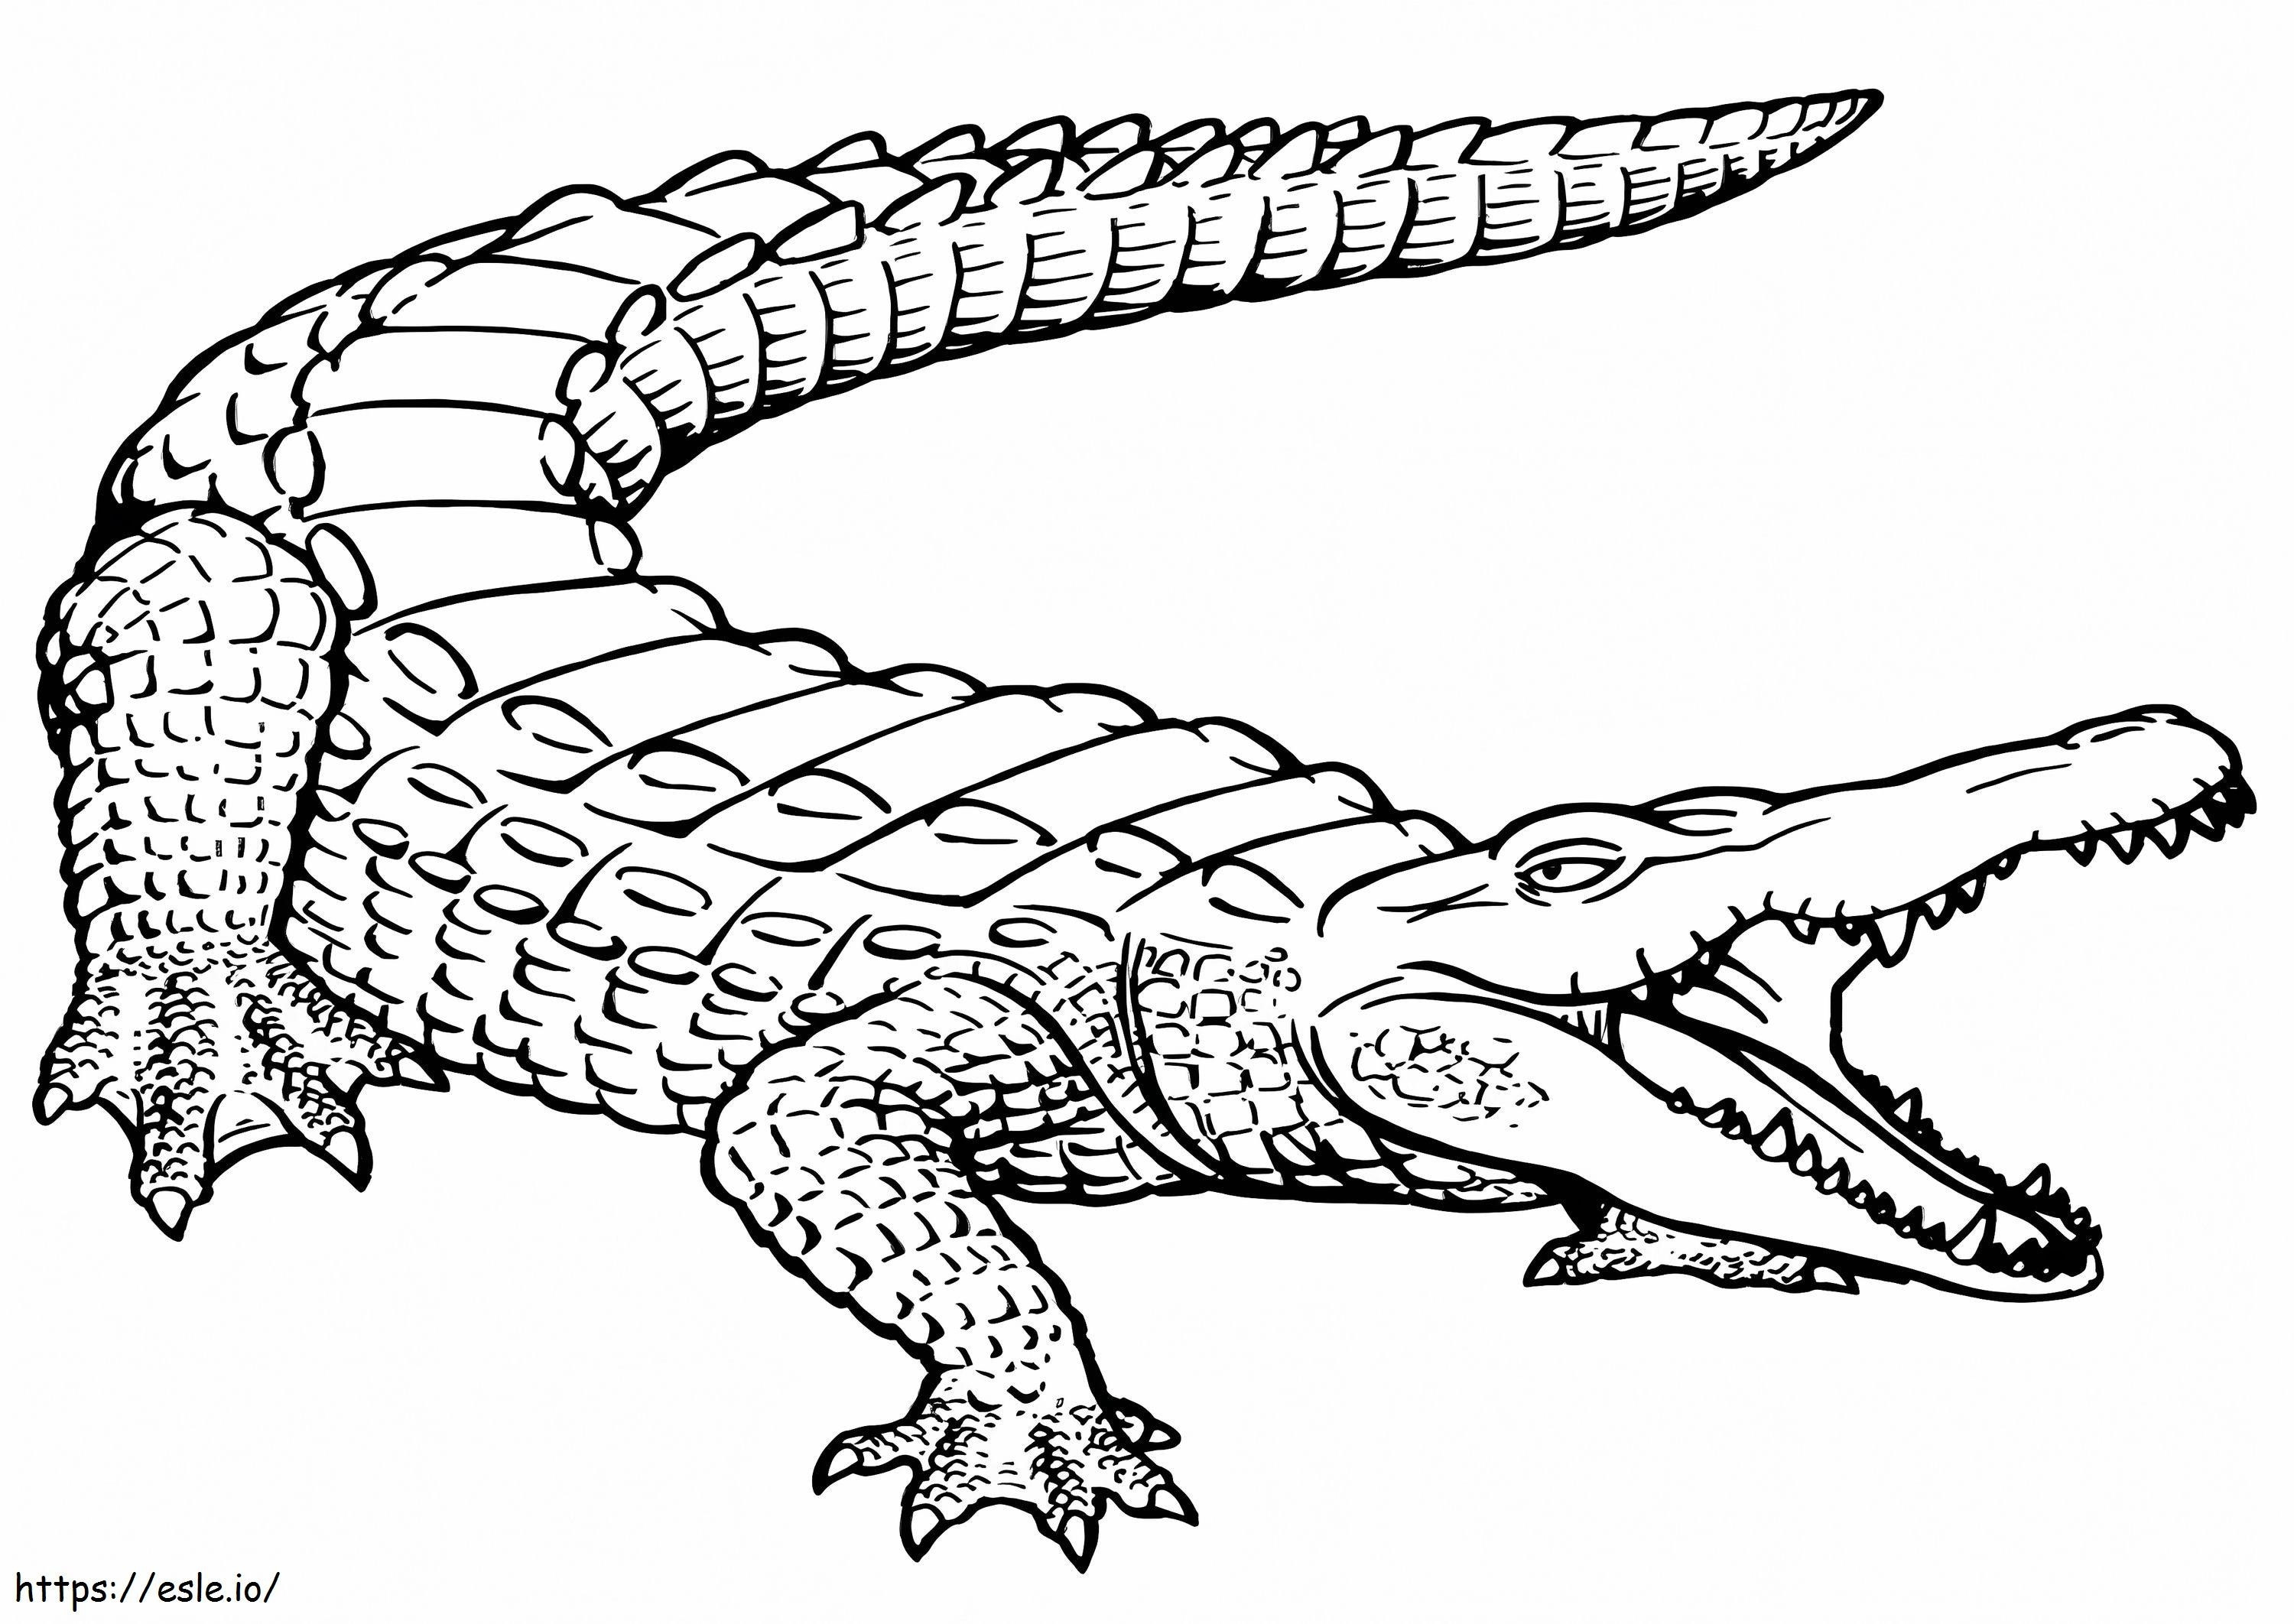 Print Crocodile coloring page